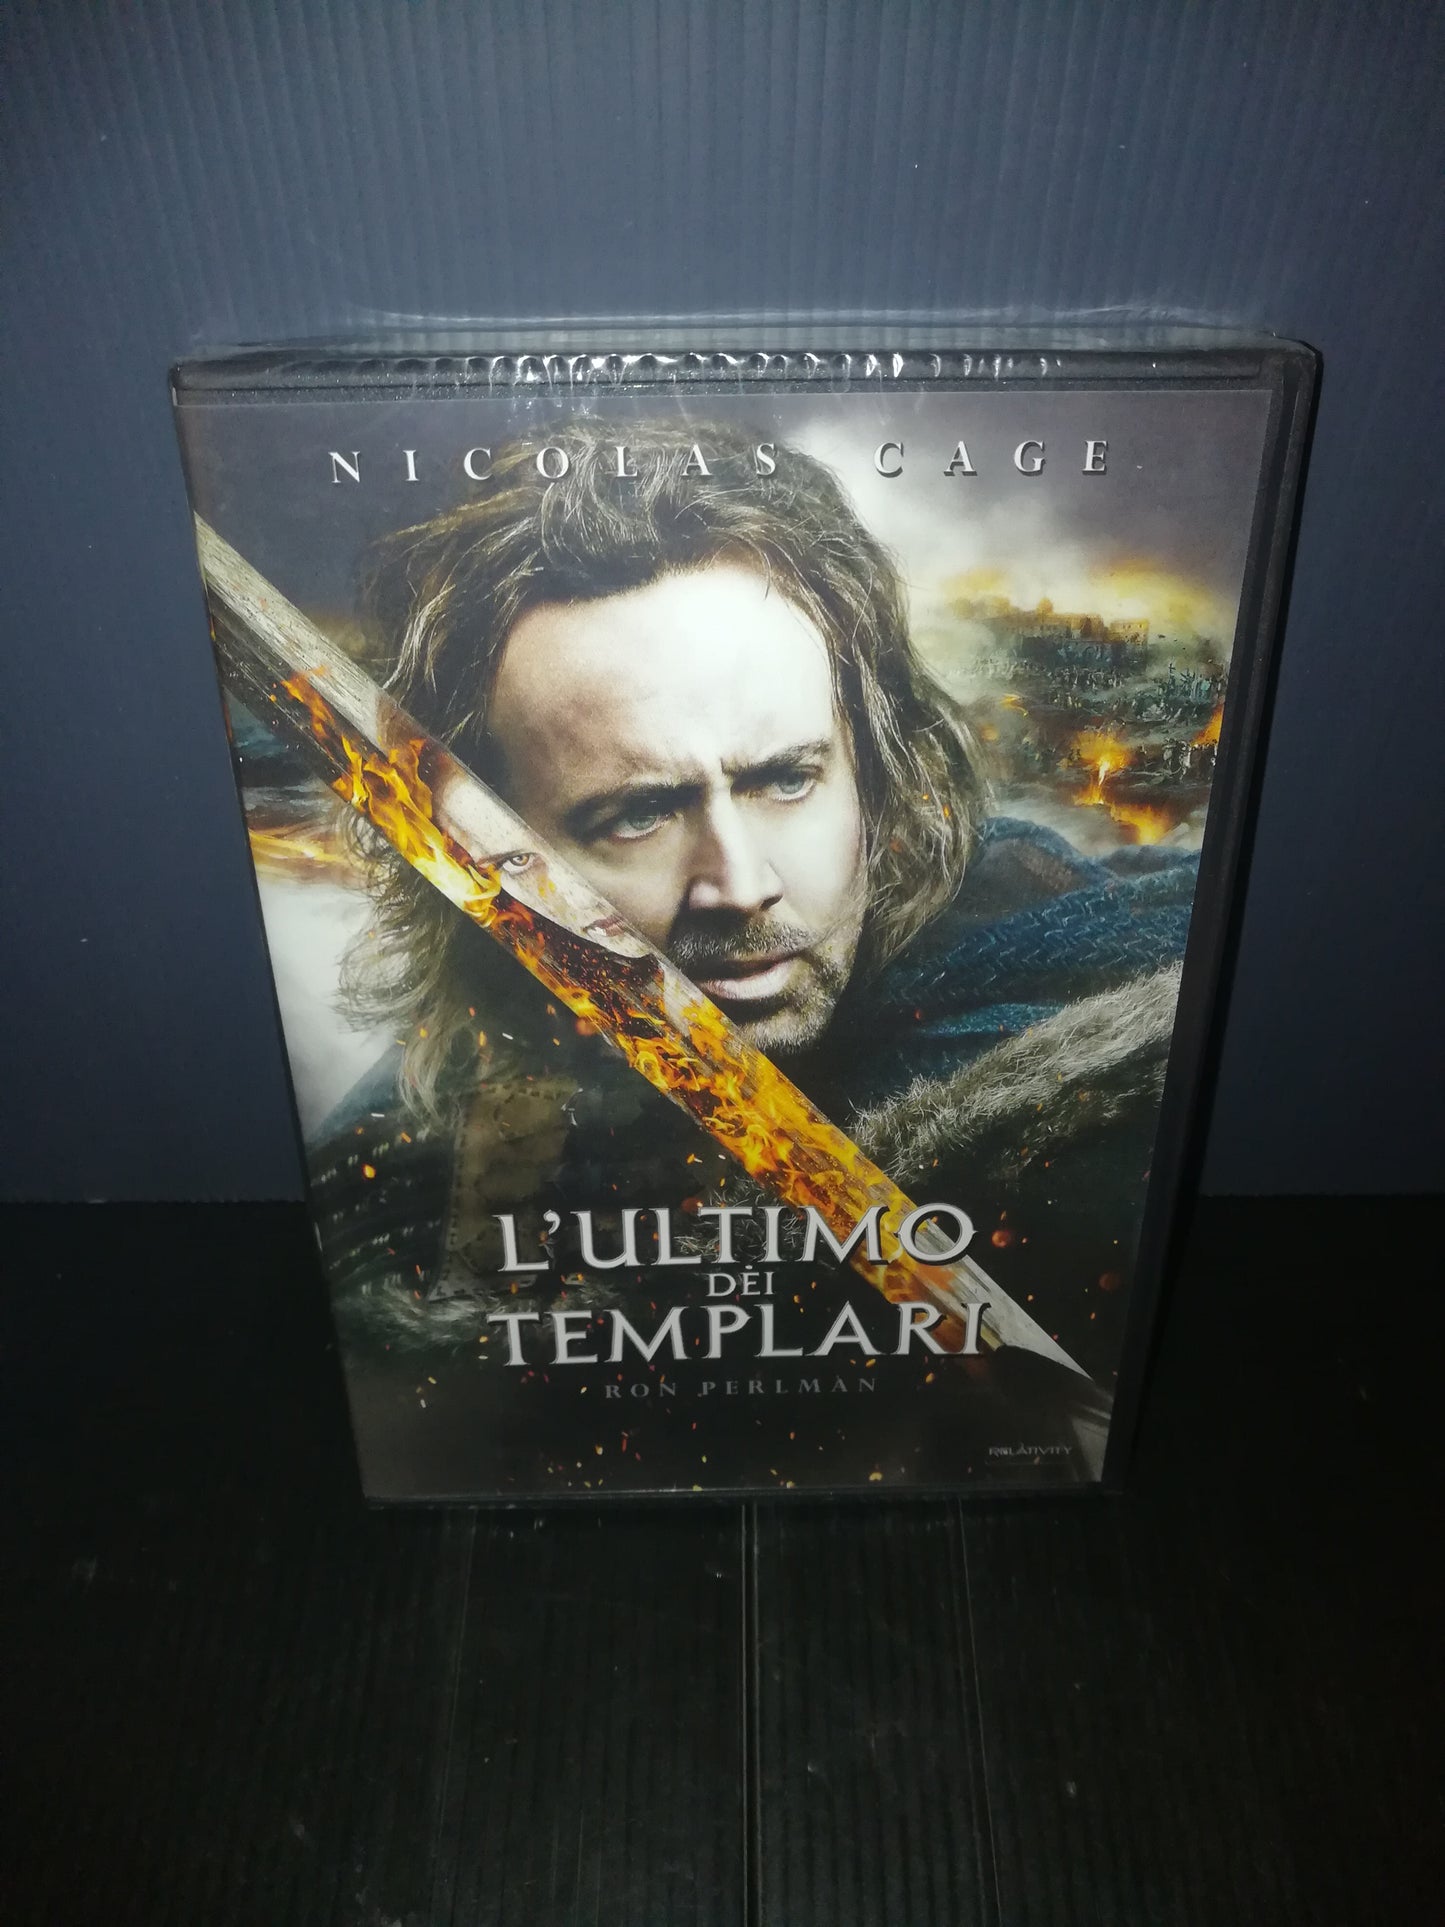 "The Last of the Templars" Nicolas Cage DVD